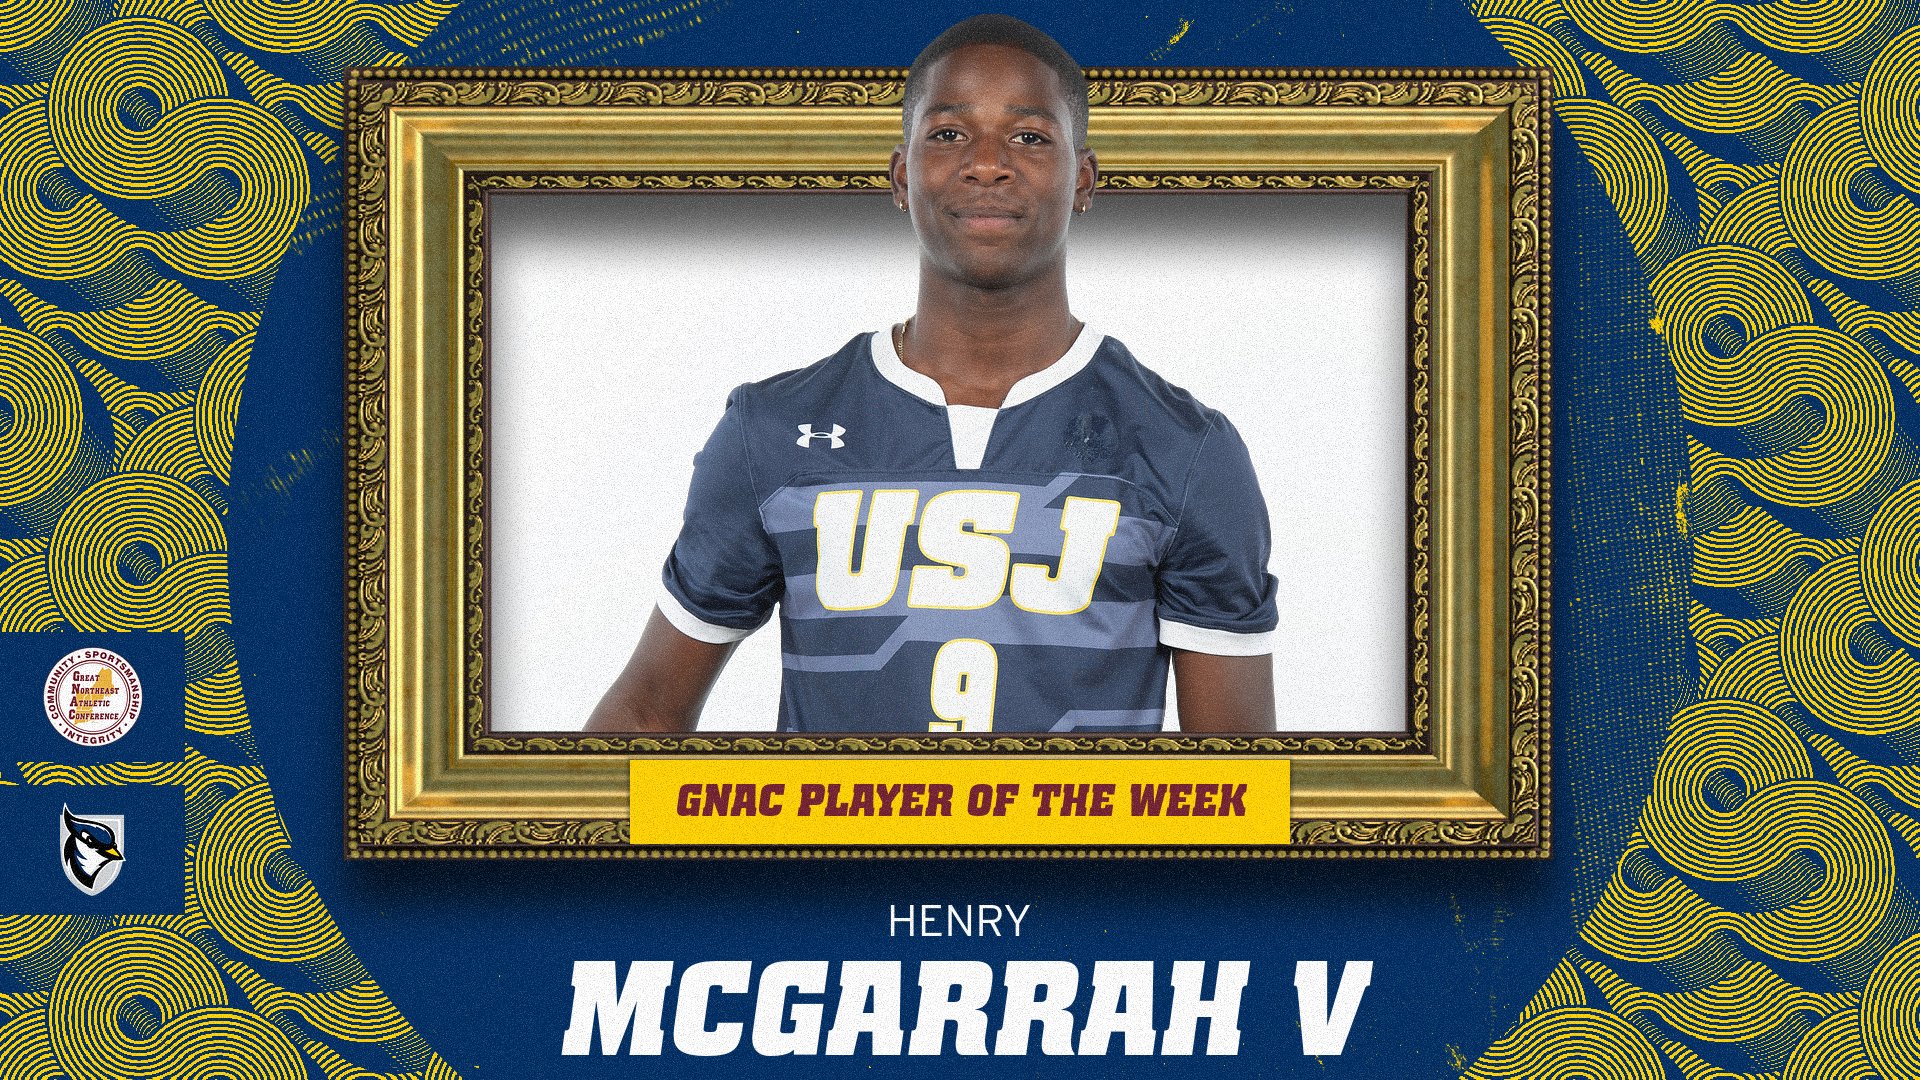 McGarrah V Named GNAC Player of the Week